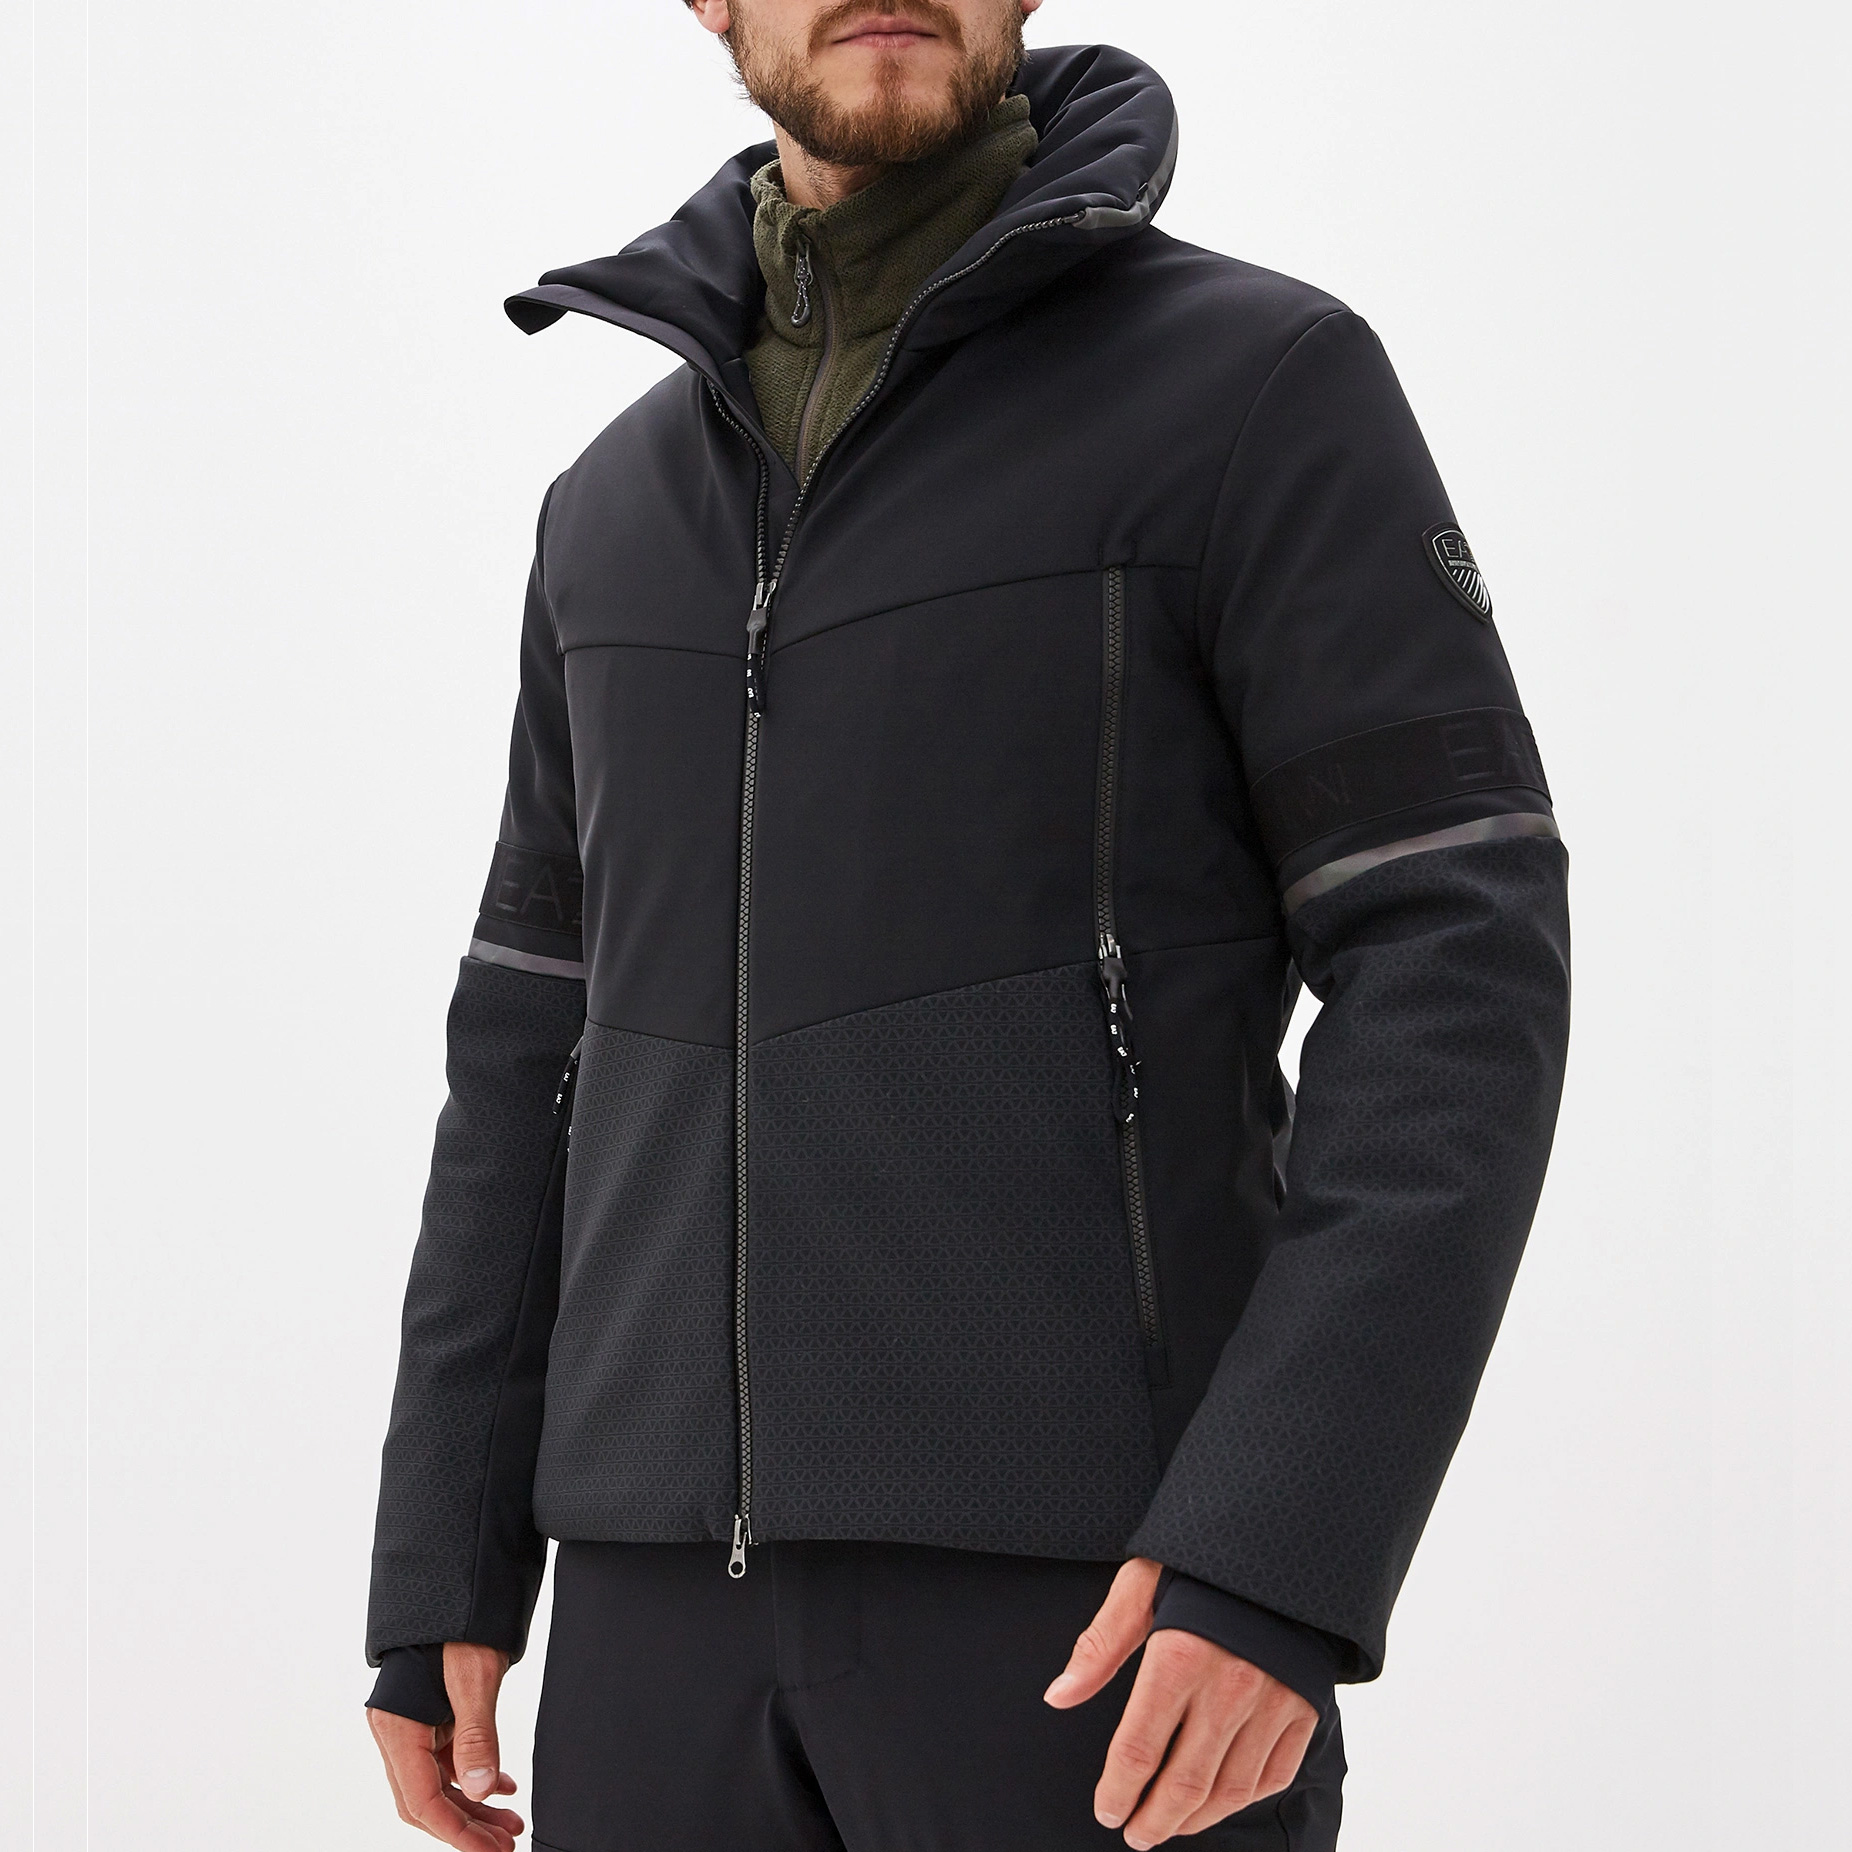 ea7 ski jacket sale